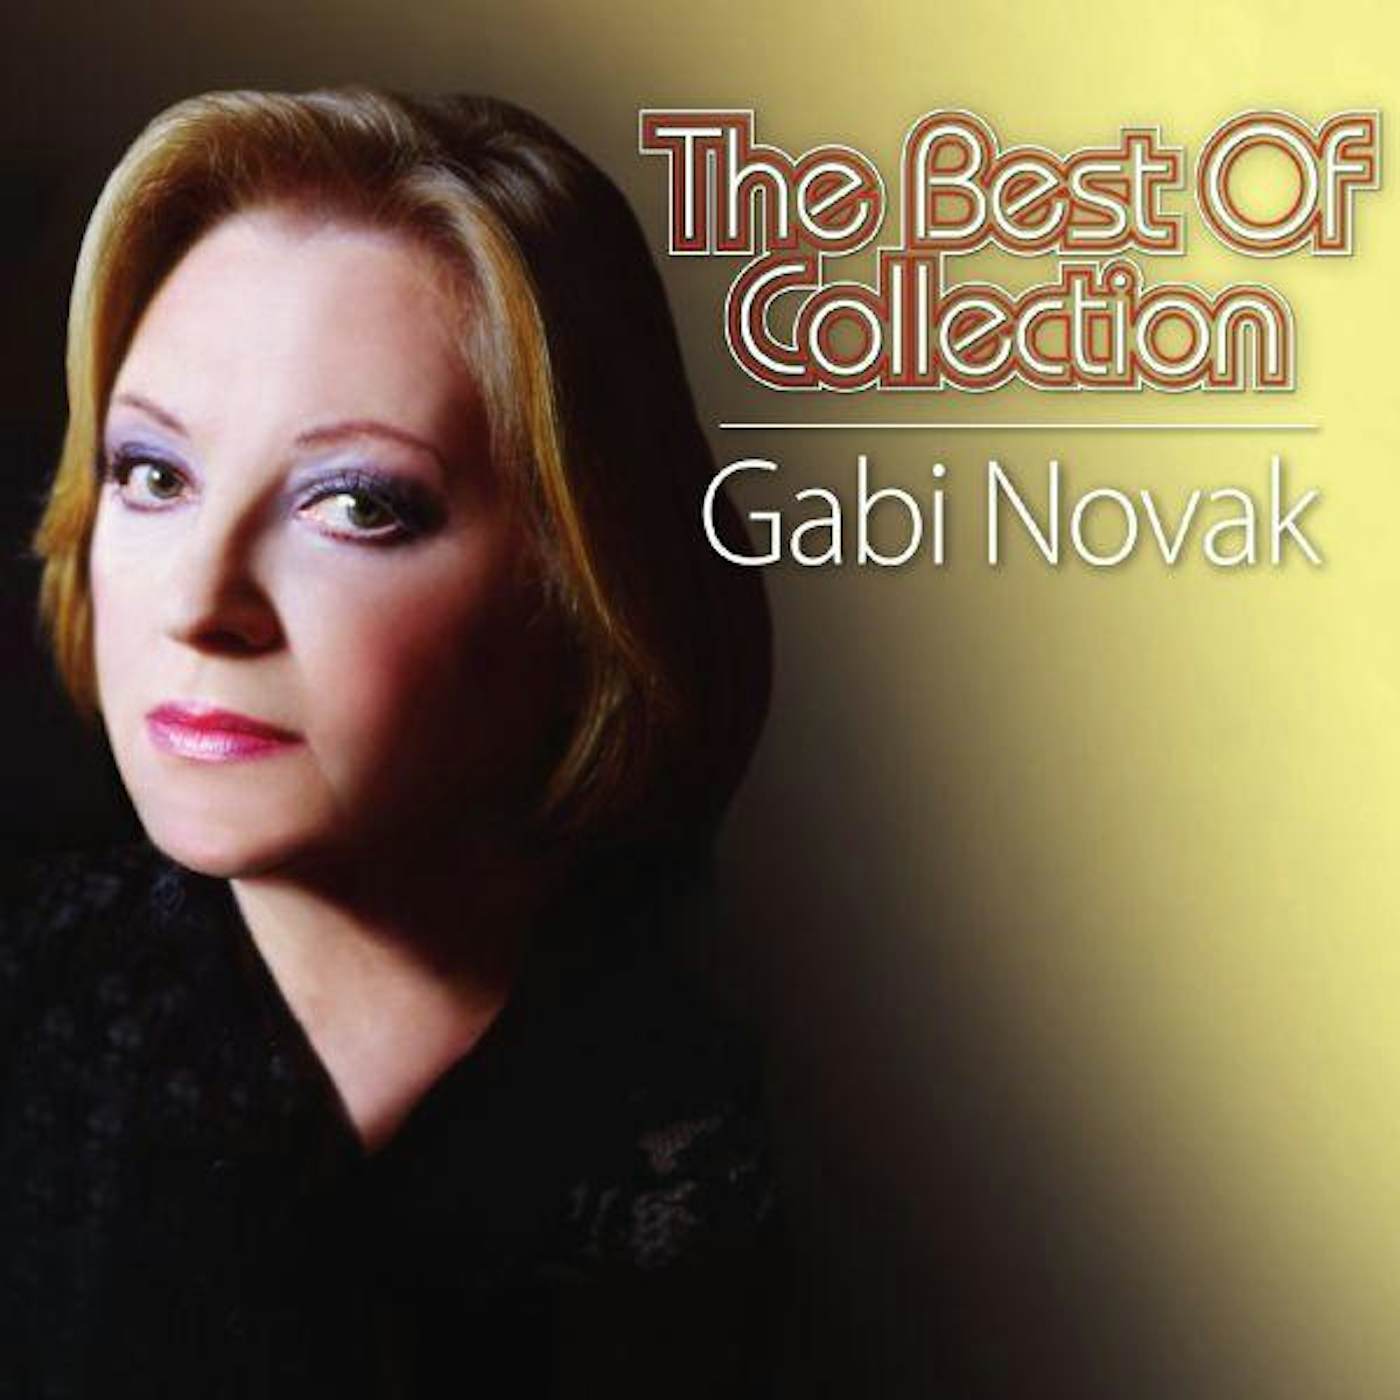 GABI NOVAK - THE BEST OF COLLECTION